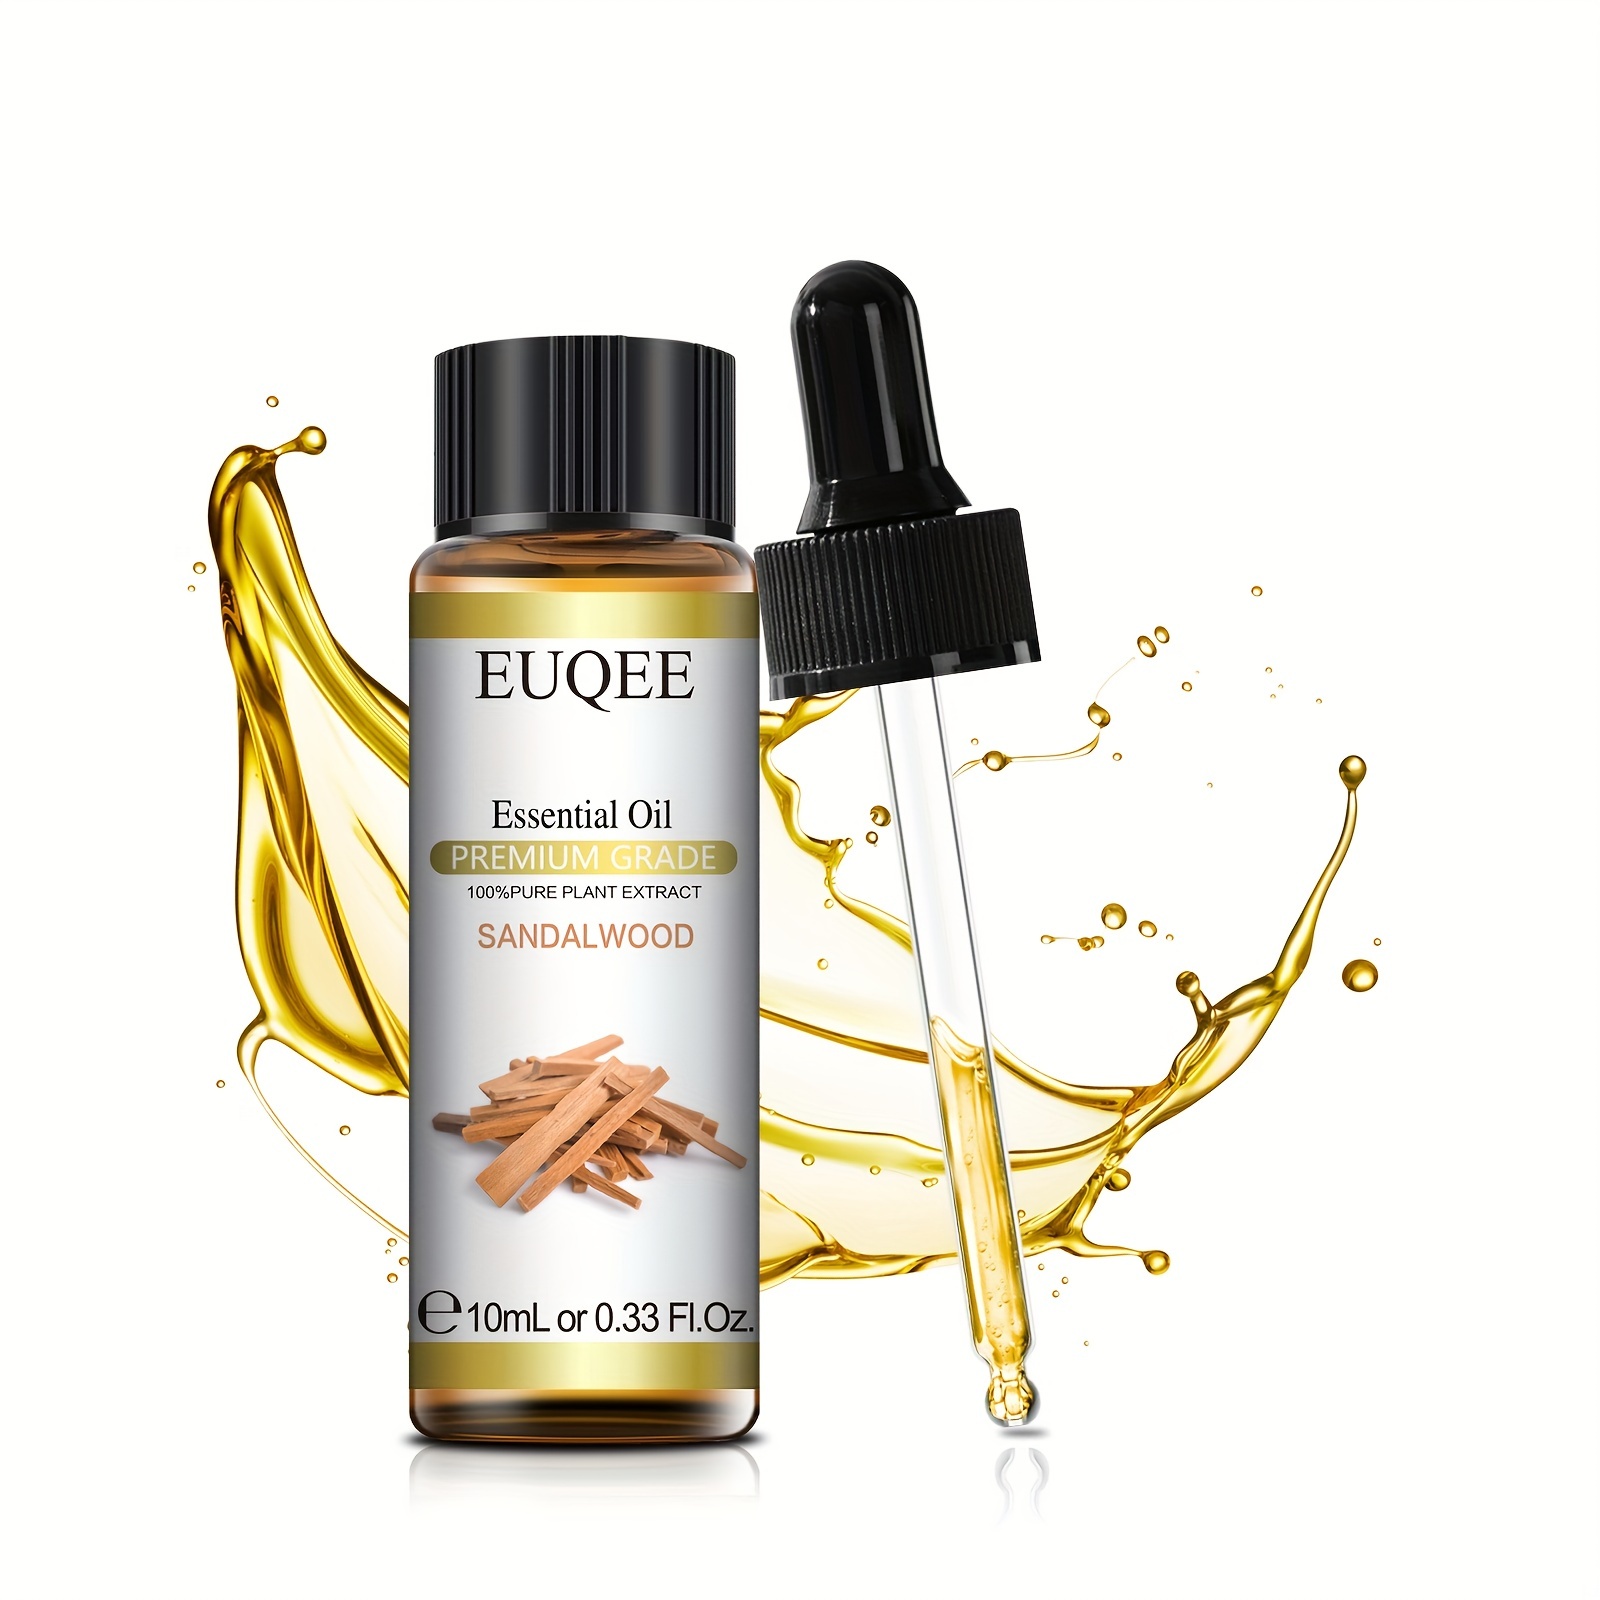 Pure Gold Essential Oils - Sandalwood Essential Oil - 0.33 Fluid Ounces